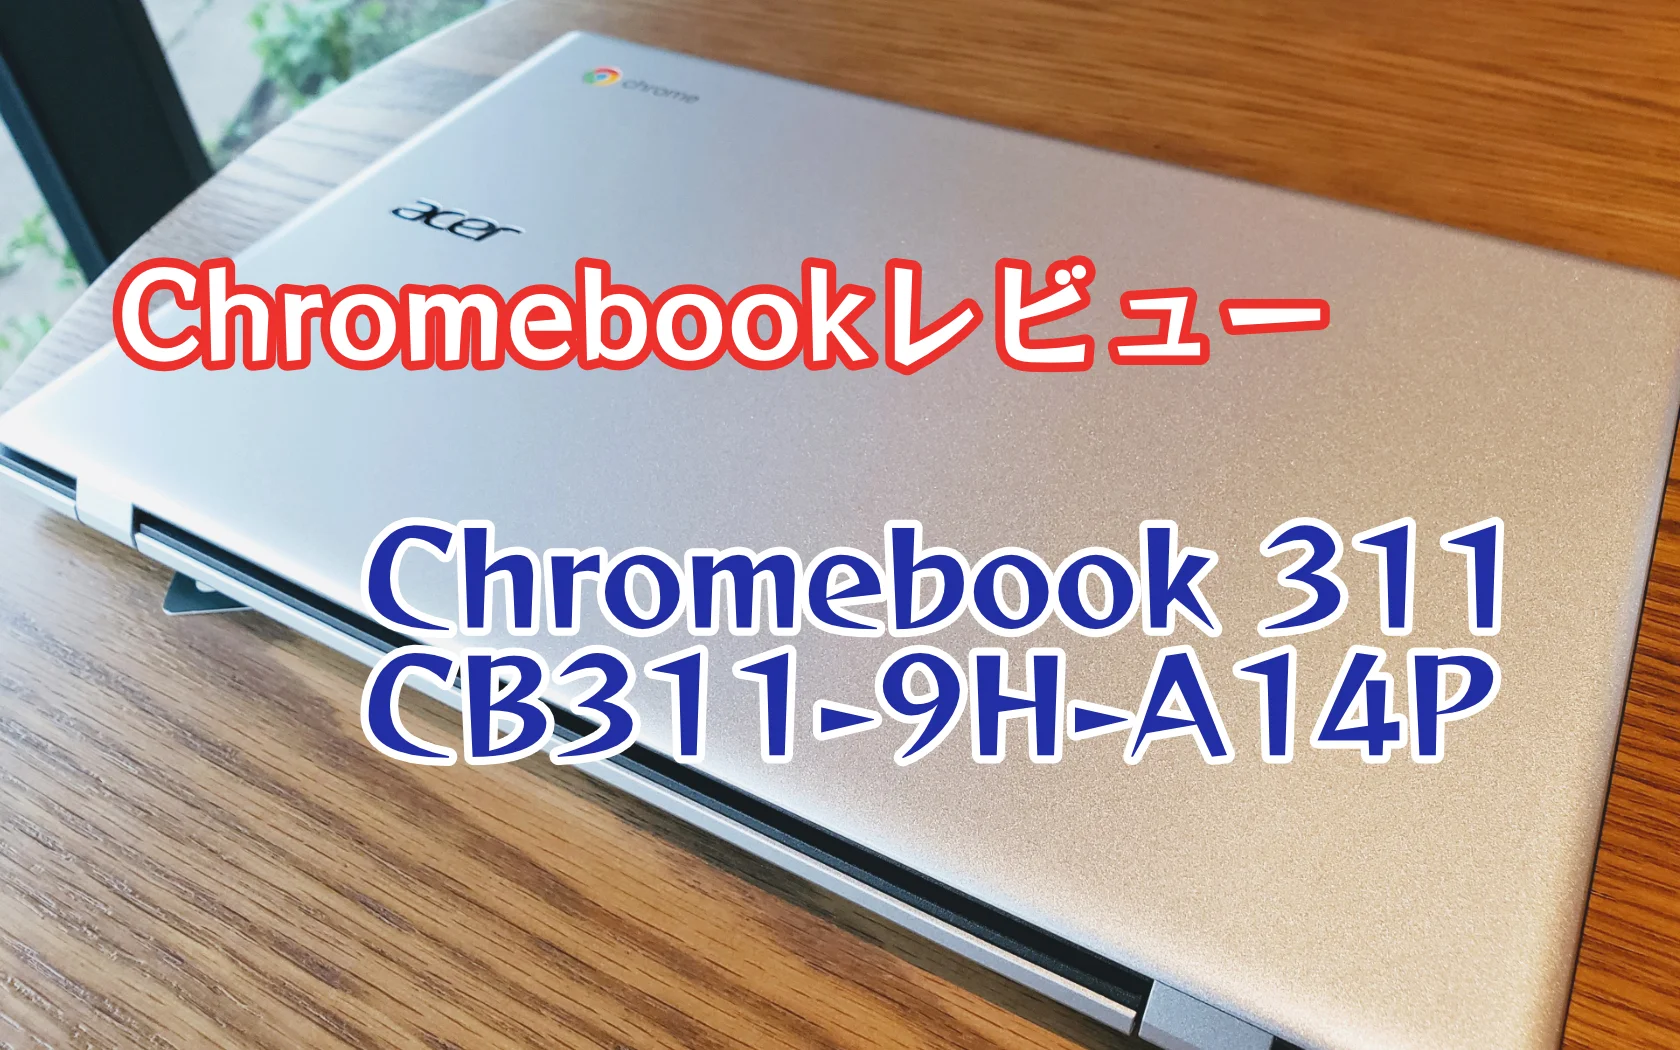 Chromebook acer CB311-9H-A14P - ノートPC